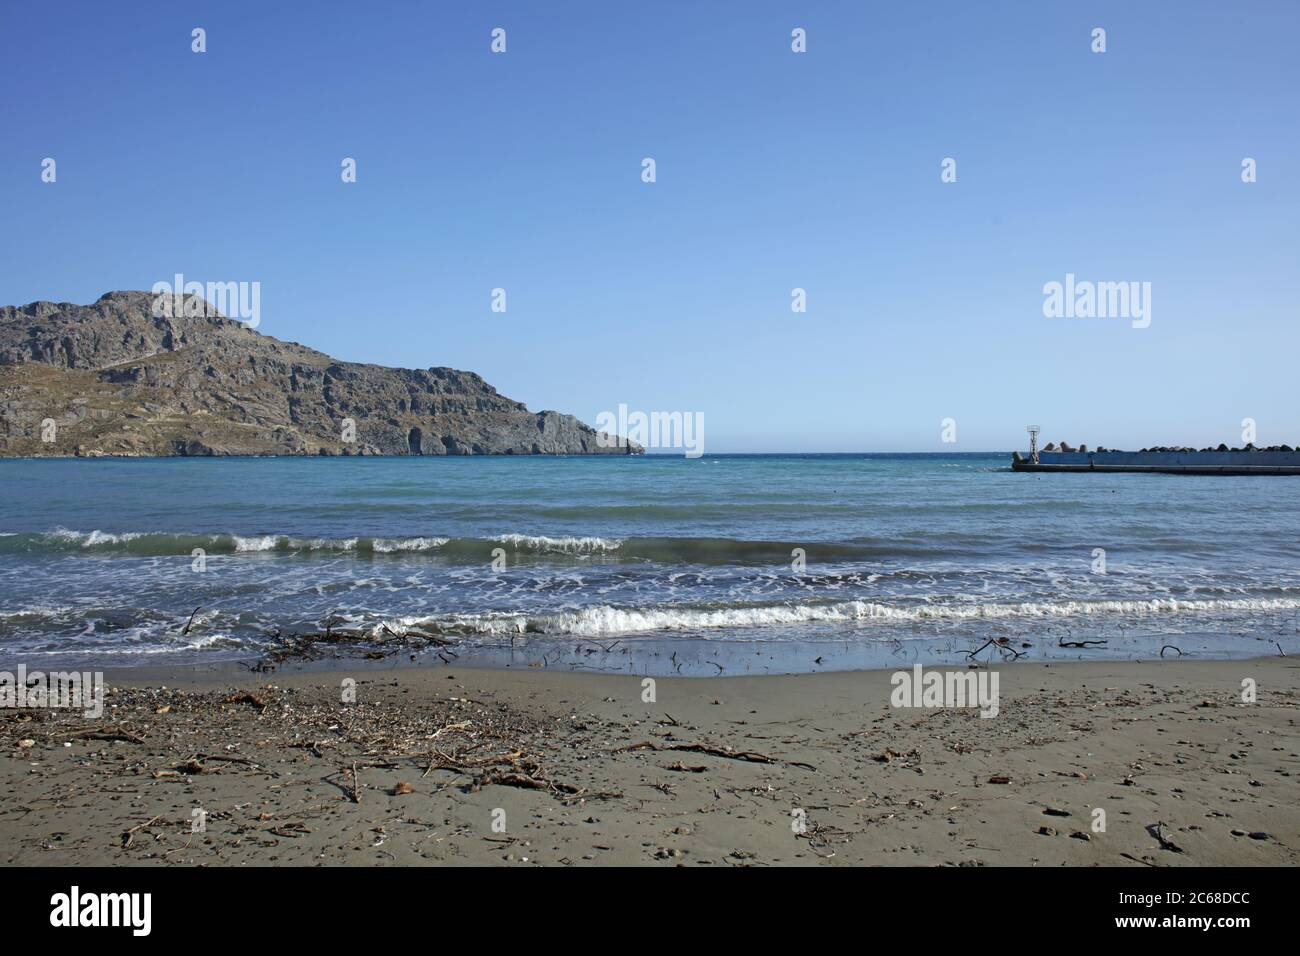 Plakias beach creta island summer 2020 covid-19 season modern high quality print Stock Photo